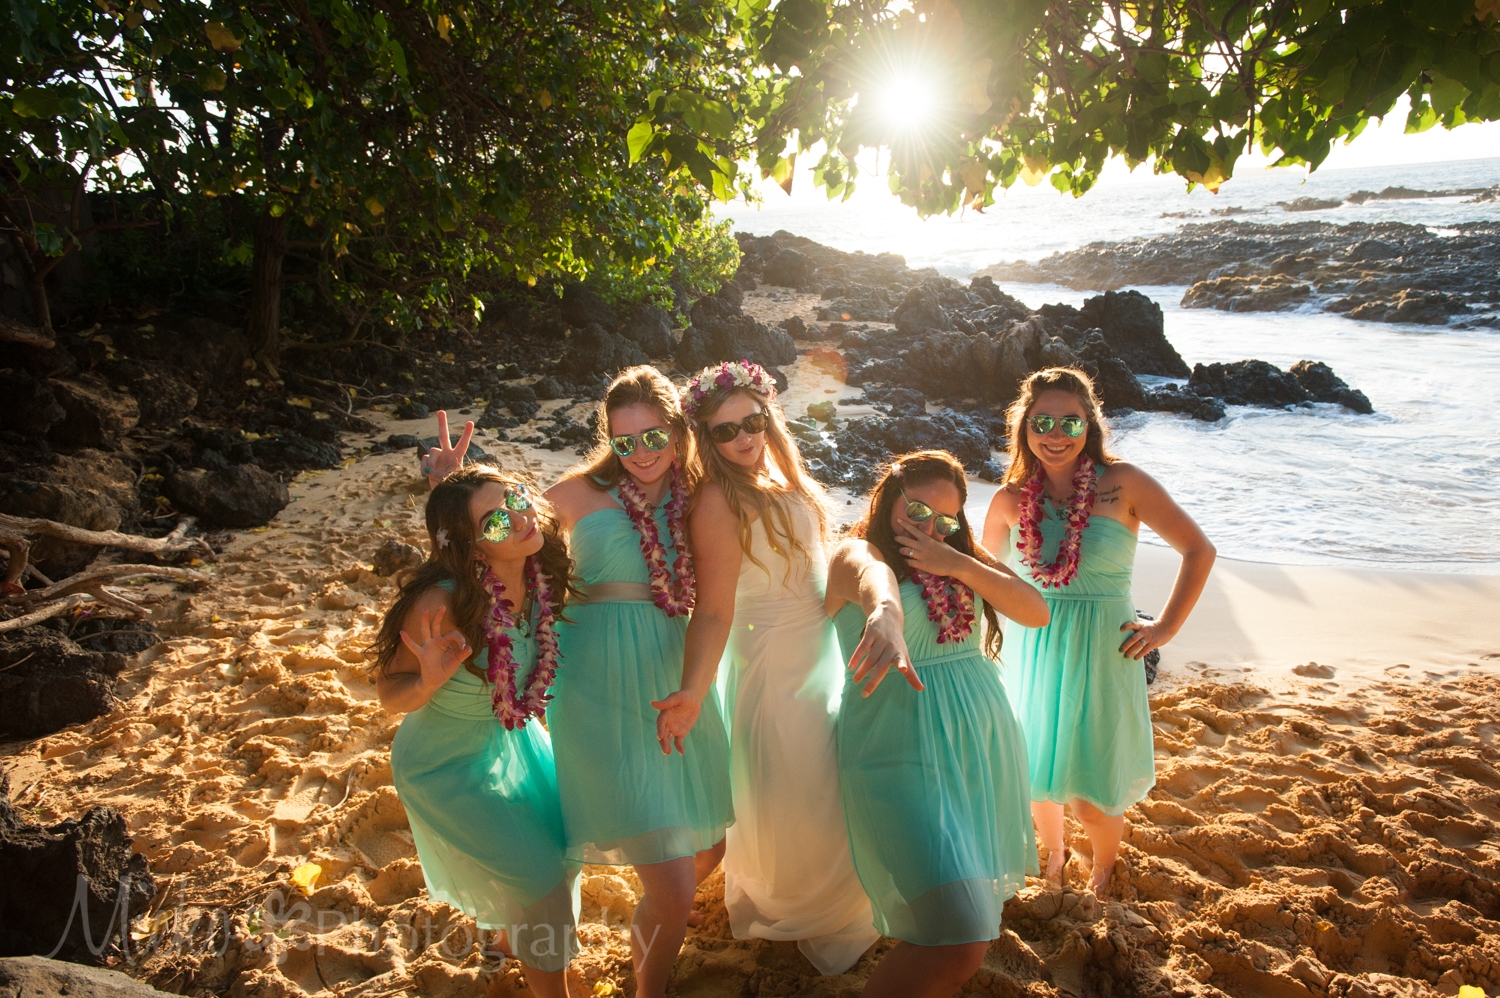 Wedding Photography at Secret Cove Beach, Makena, Maui.  Photography by Mieko Horikoshi.  日本人フォトグラファーによるハワイビーチウェディング撮影。